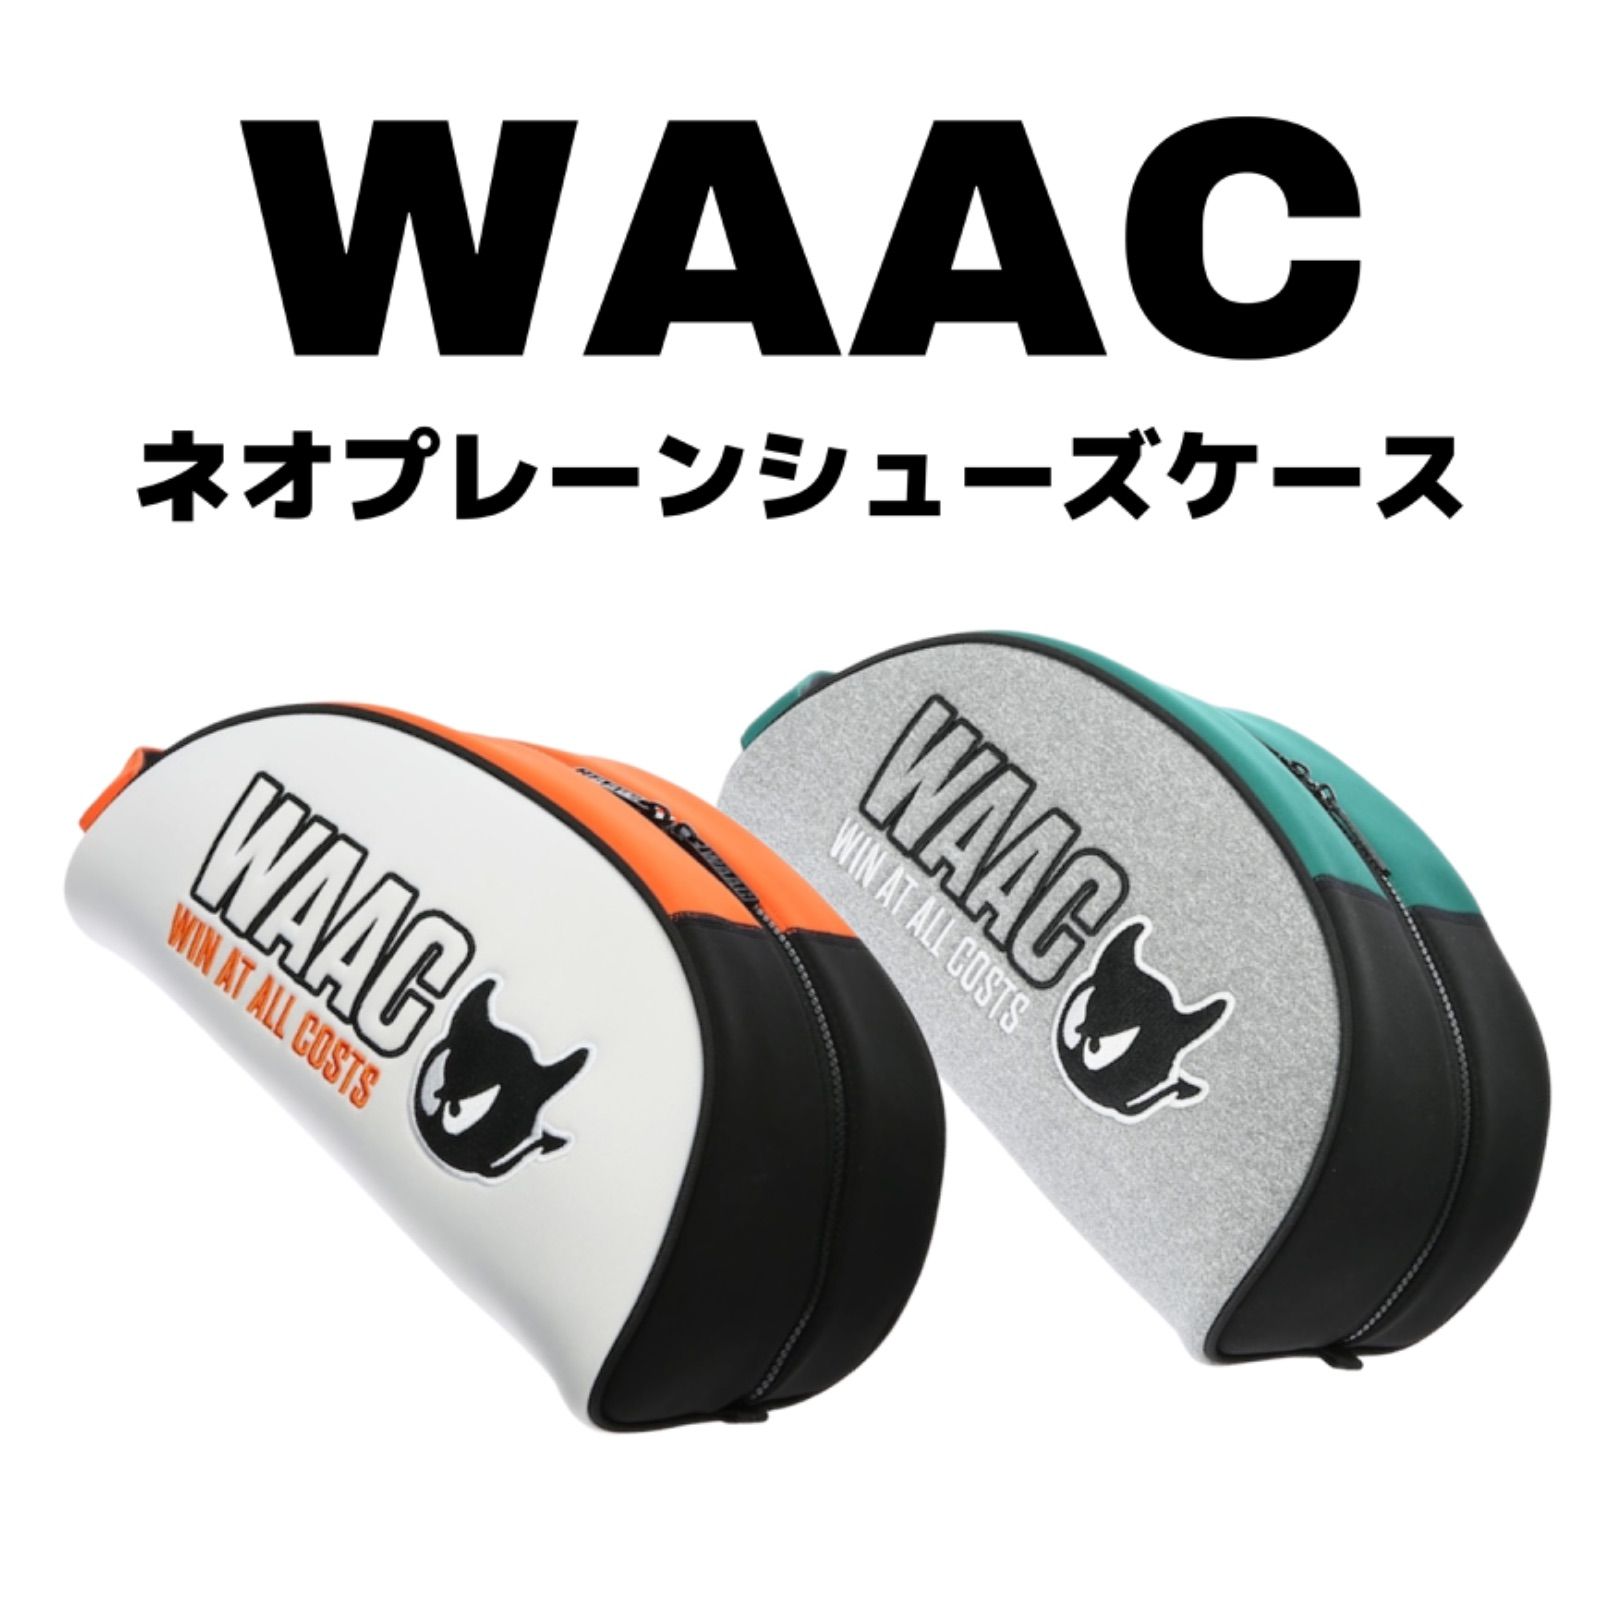 WAAC シューズケース - えふ 11/7-8 休み - メルカリ